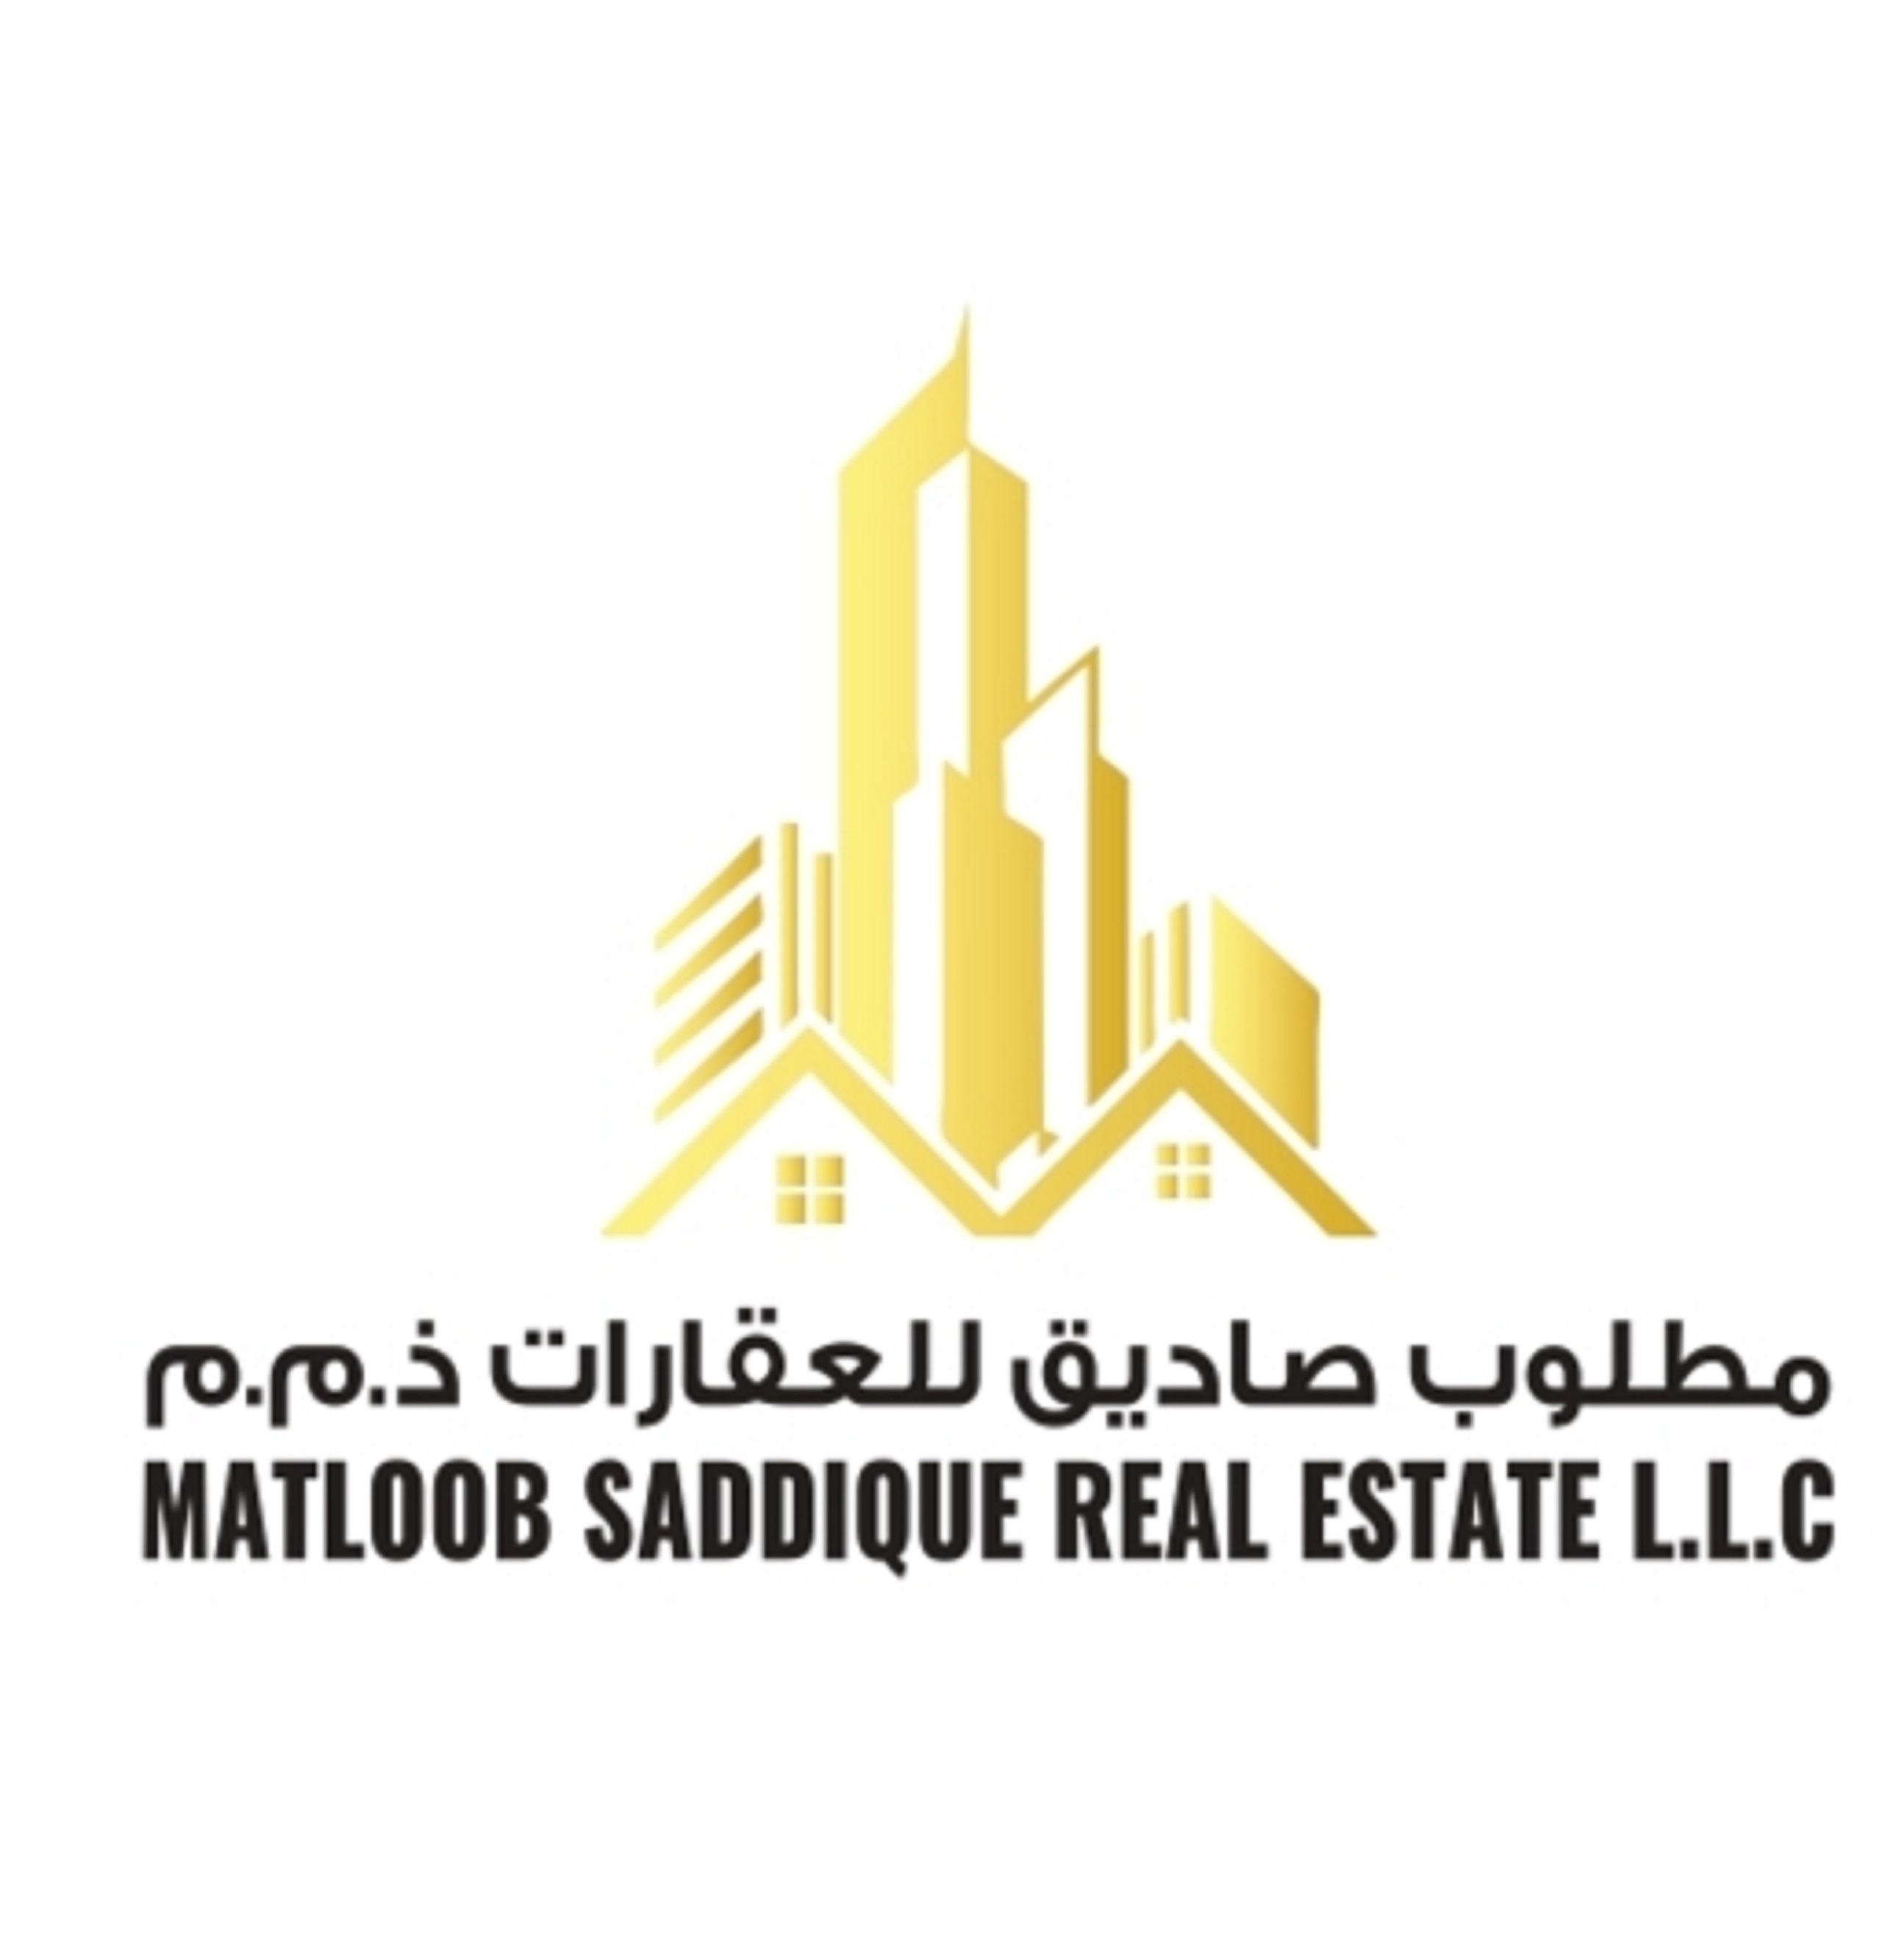 Matloob Saddique Real Estate